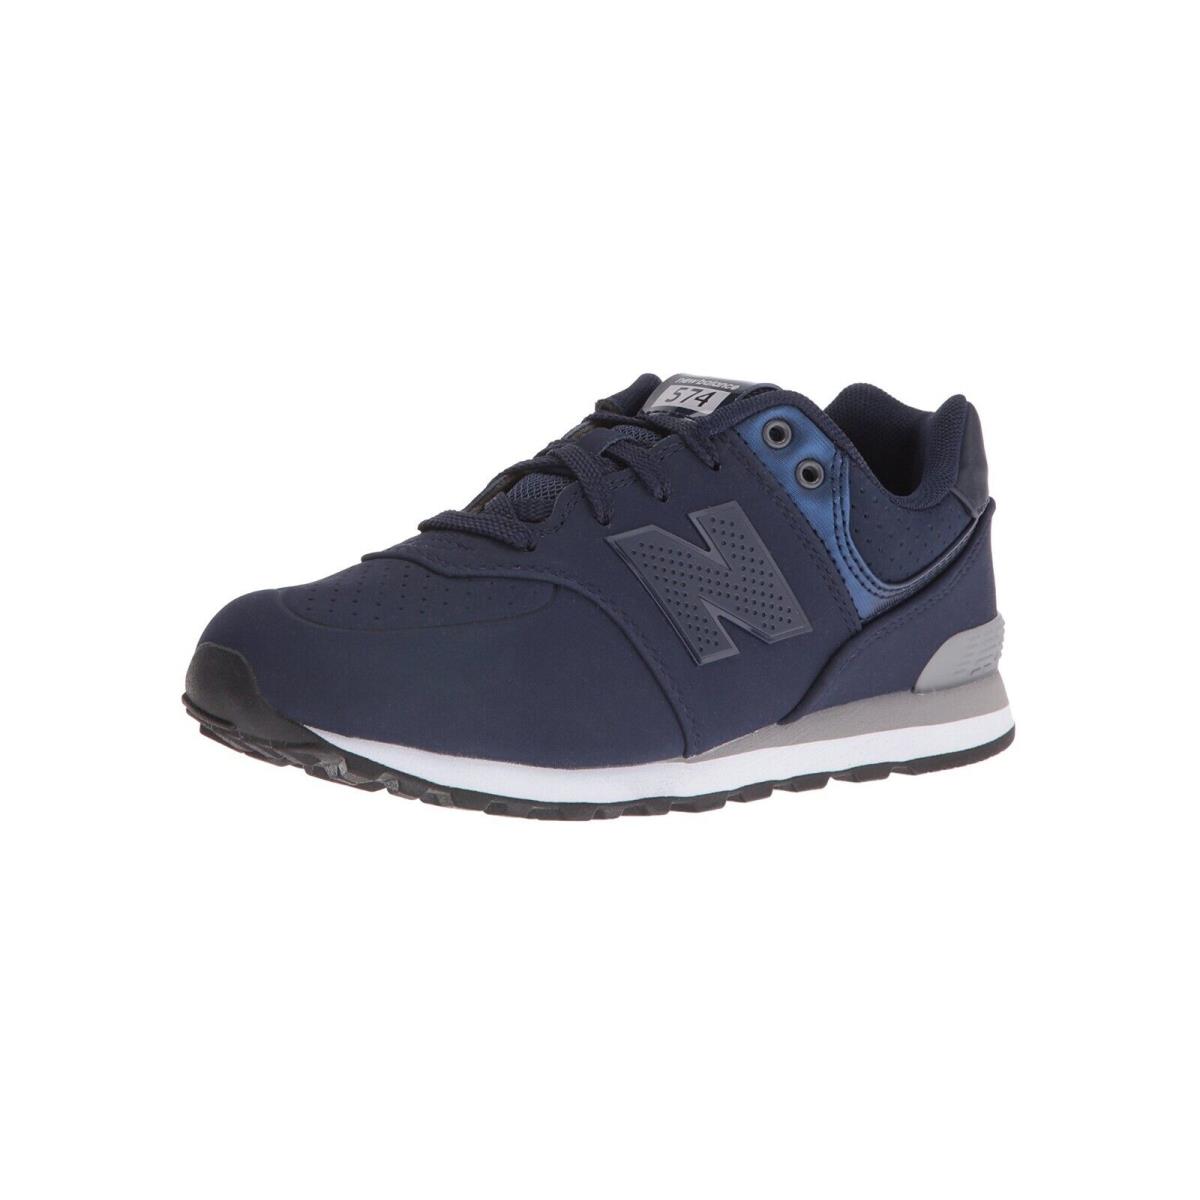 New Balance 574 Big Kids Running Shoes Sneakers KL574A4G - Navy Blue